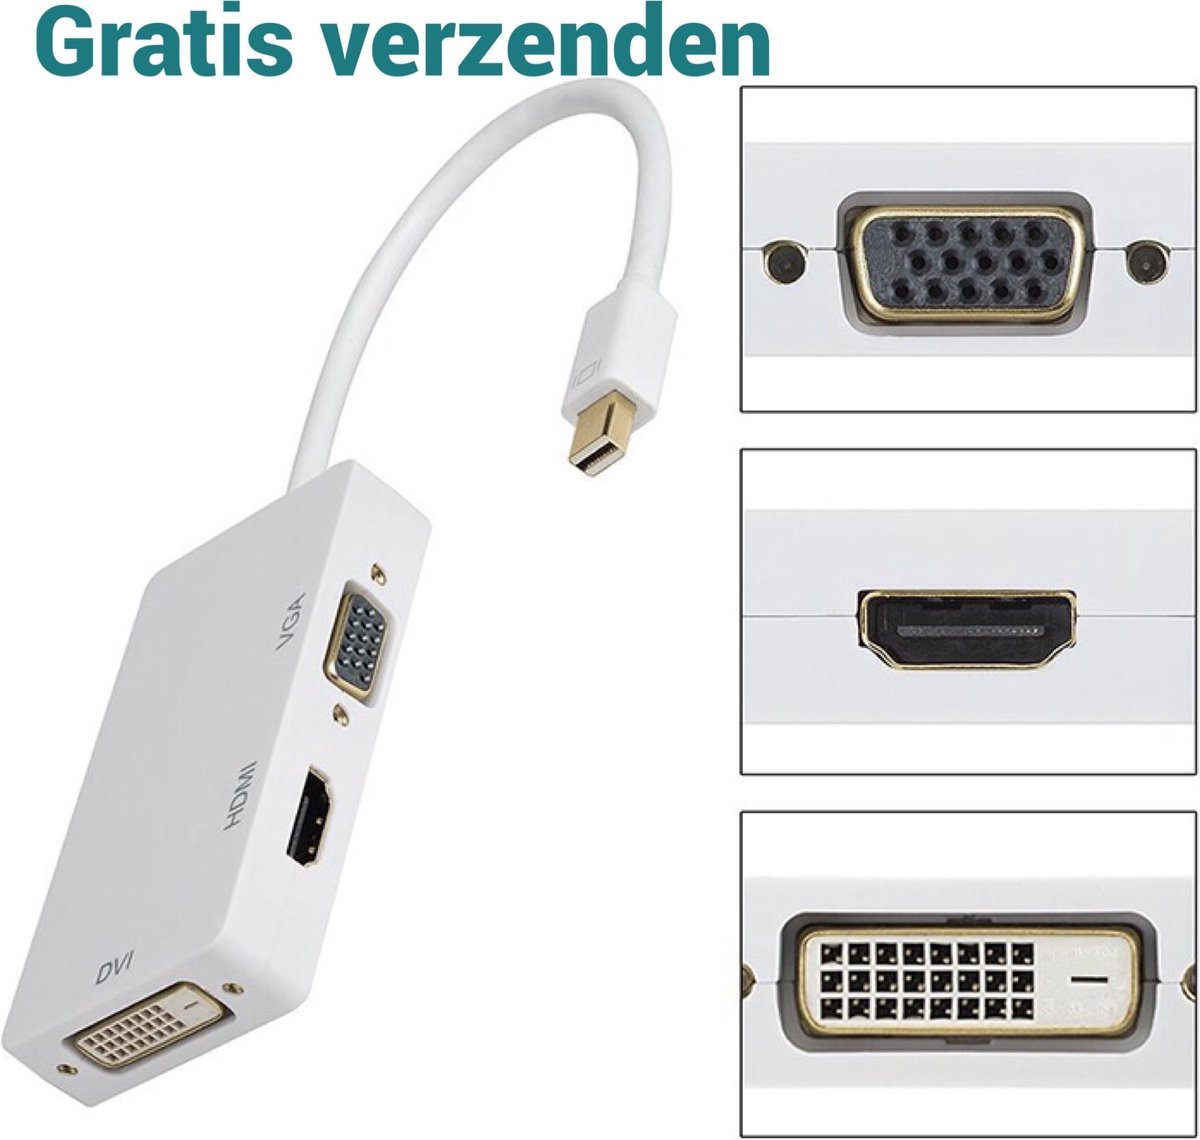 SAiZi 3 in 1 Supersnelle Mini Display port (Thunderbolt) Naar VGA & HDMI & DVI Monitor Kabel / Adapter / Schakelaar / Mini Display Port To VGA Connector / Omvormer Voor Apple / Mac / Macbook - Saizi